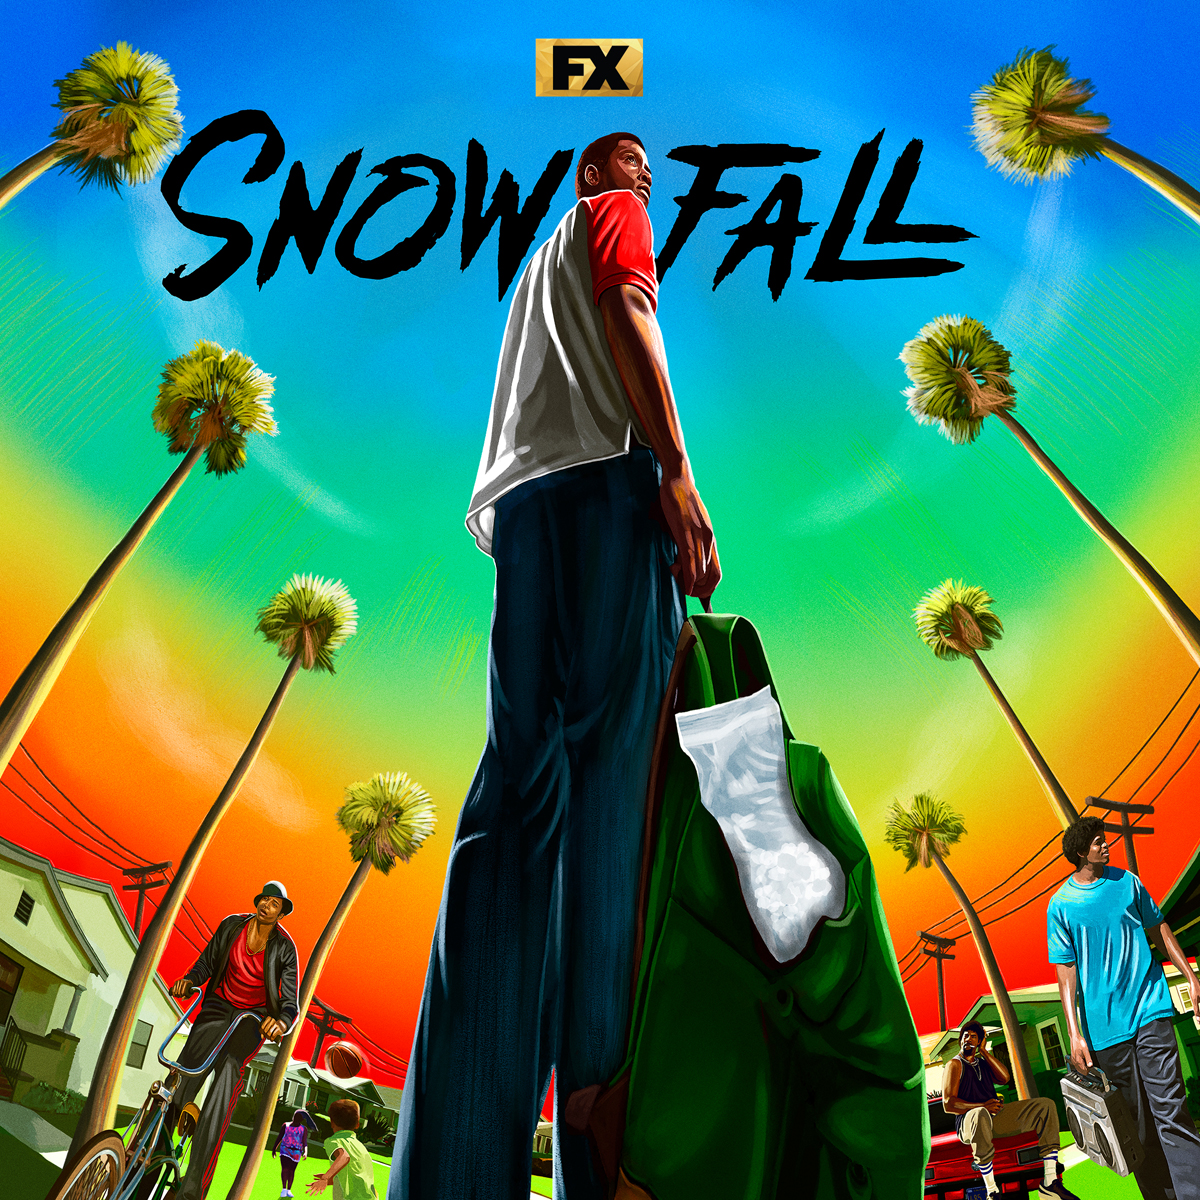 Listen to Music from FX's Snowfall Season 1